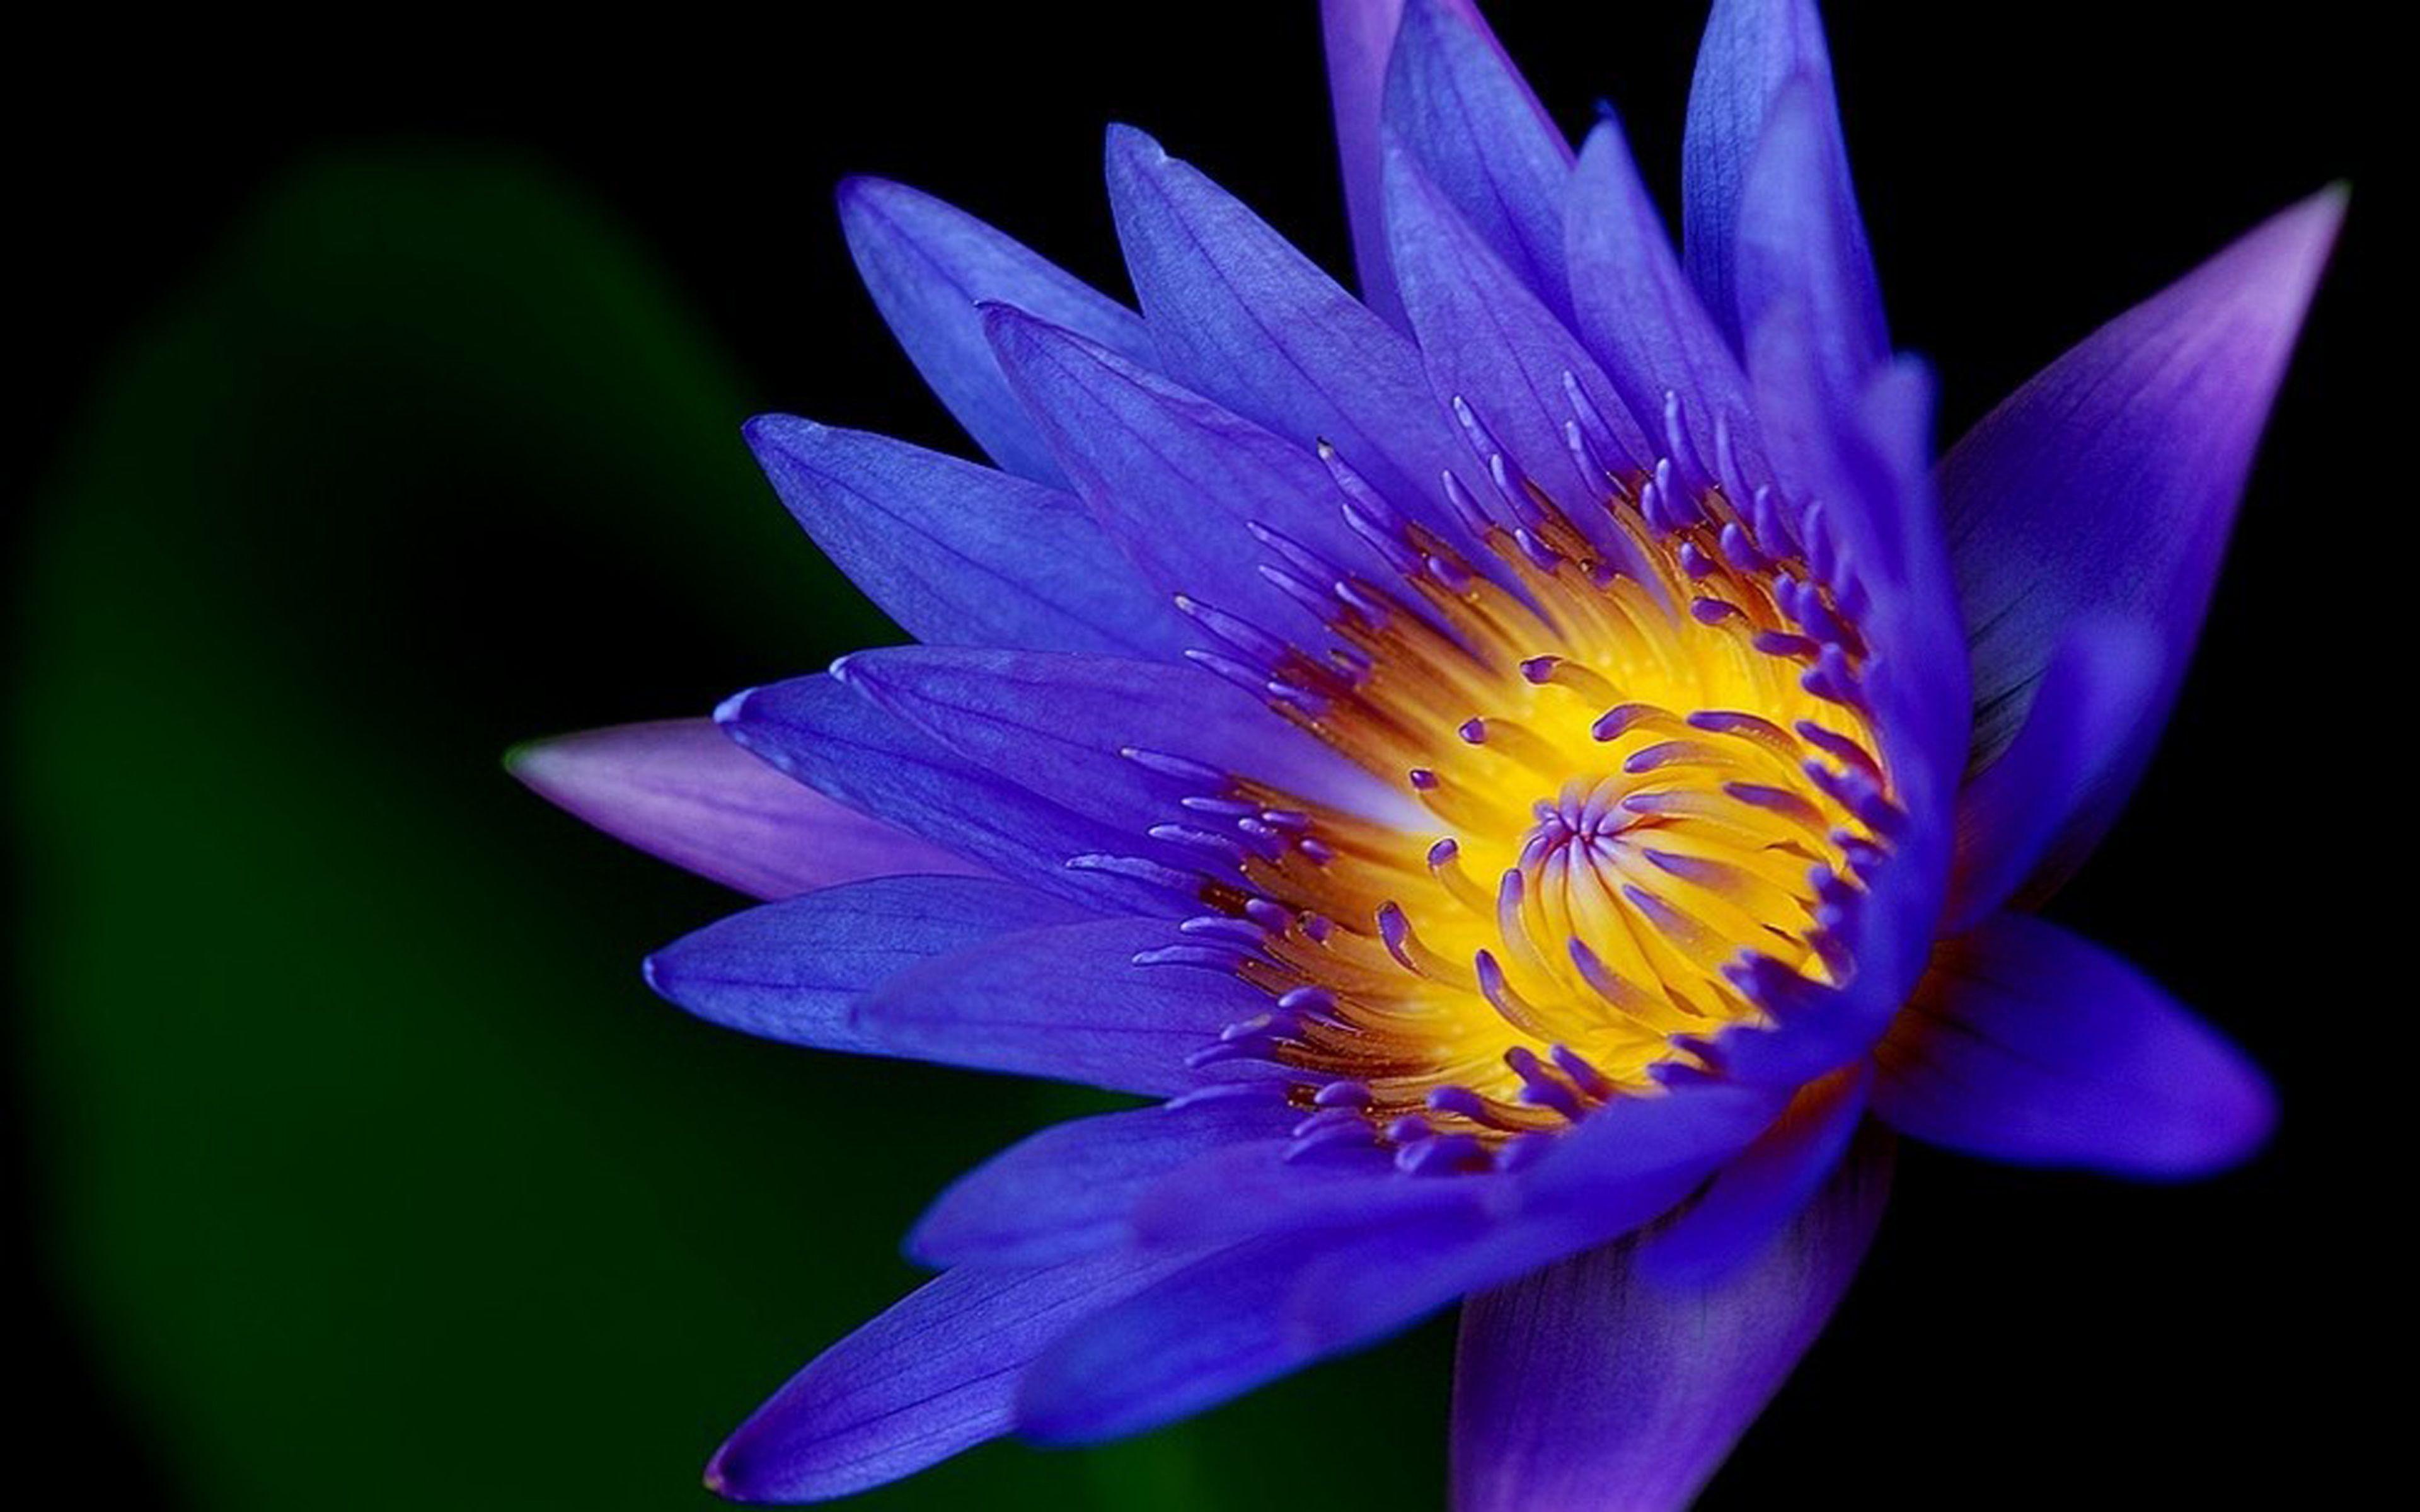 Lotus Flower Dark Blue Color HD Wallpaper For Mobile Phones